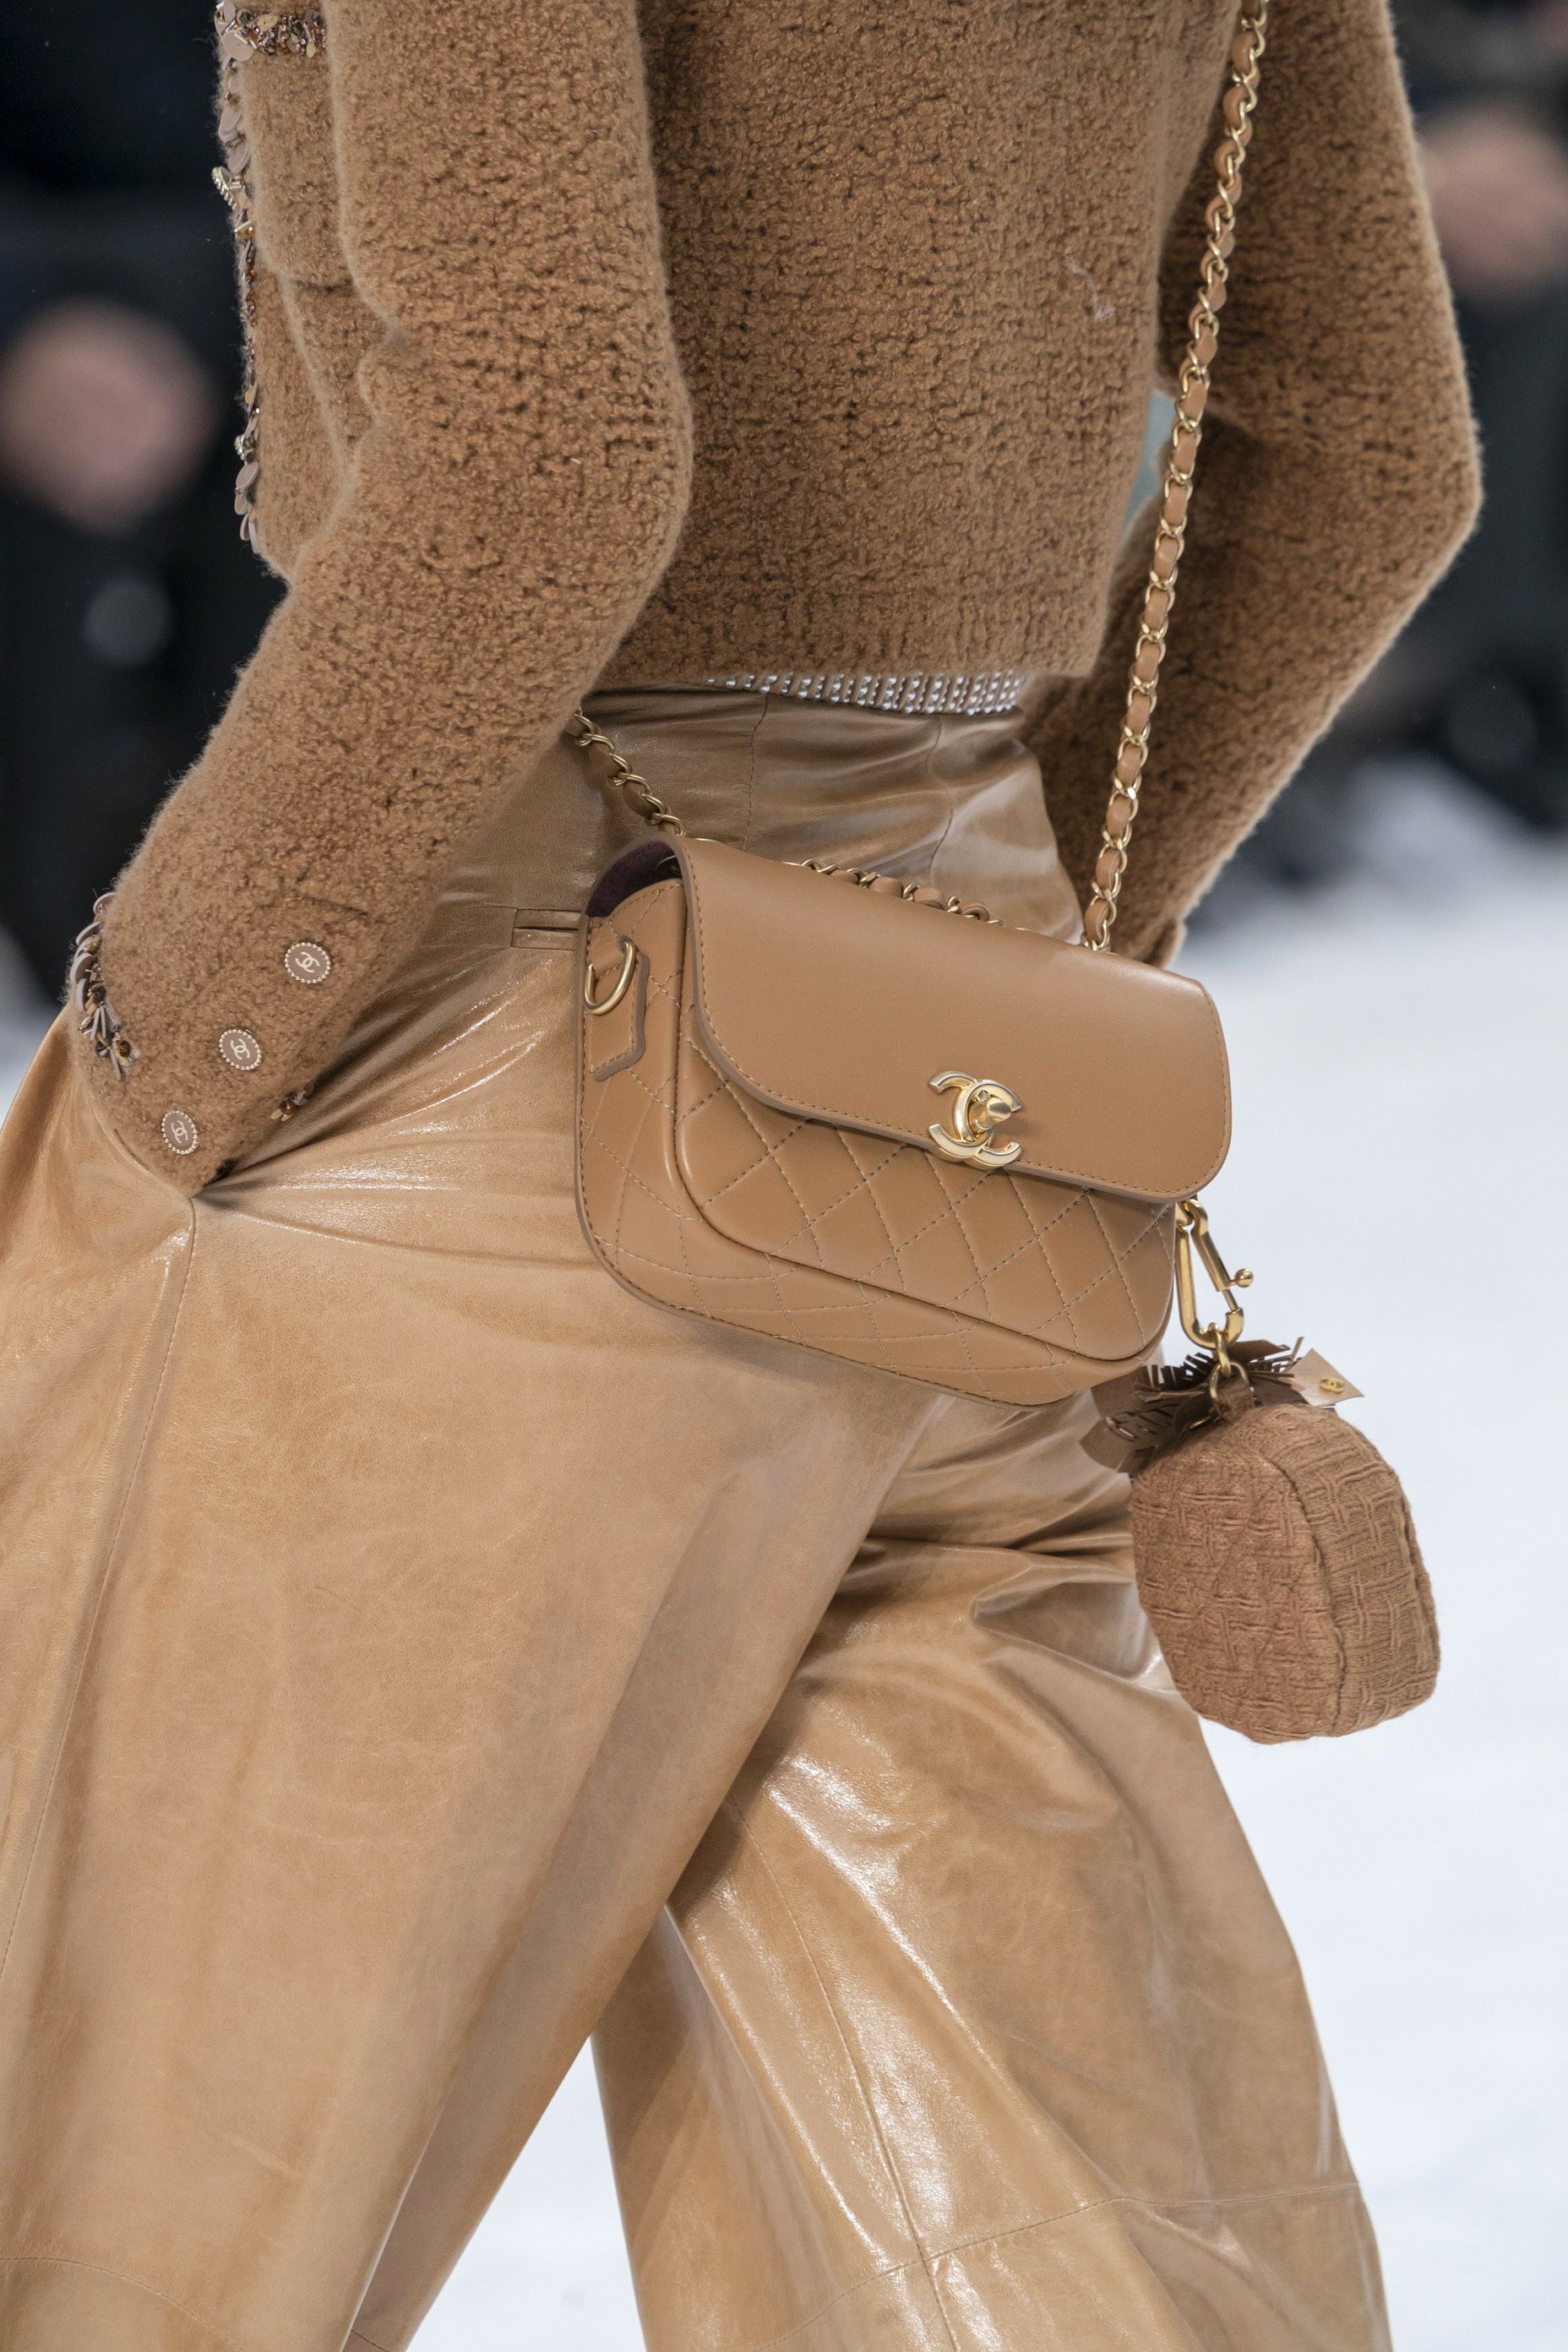 VERY VERY RARE VINTAGE CHANEL HANDBAG  Vintage chanel bag Chanel handbags  Chanel bag